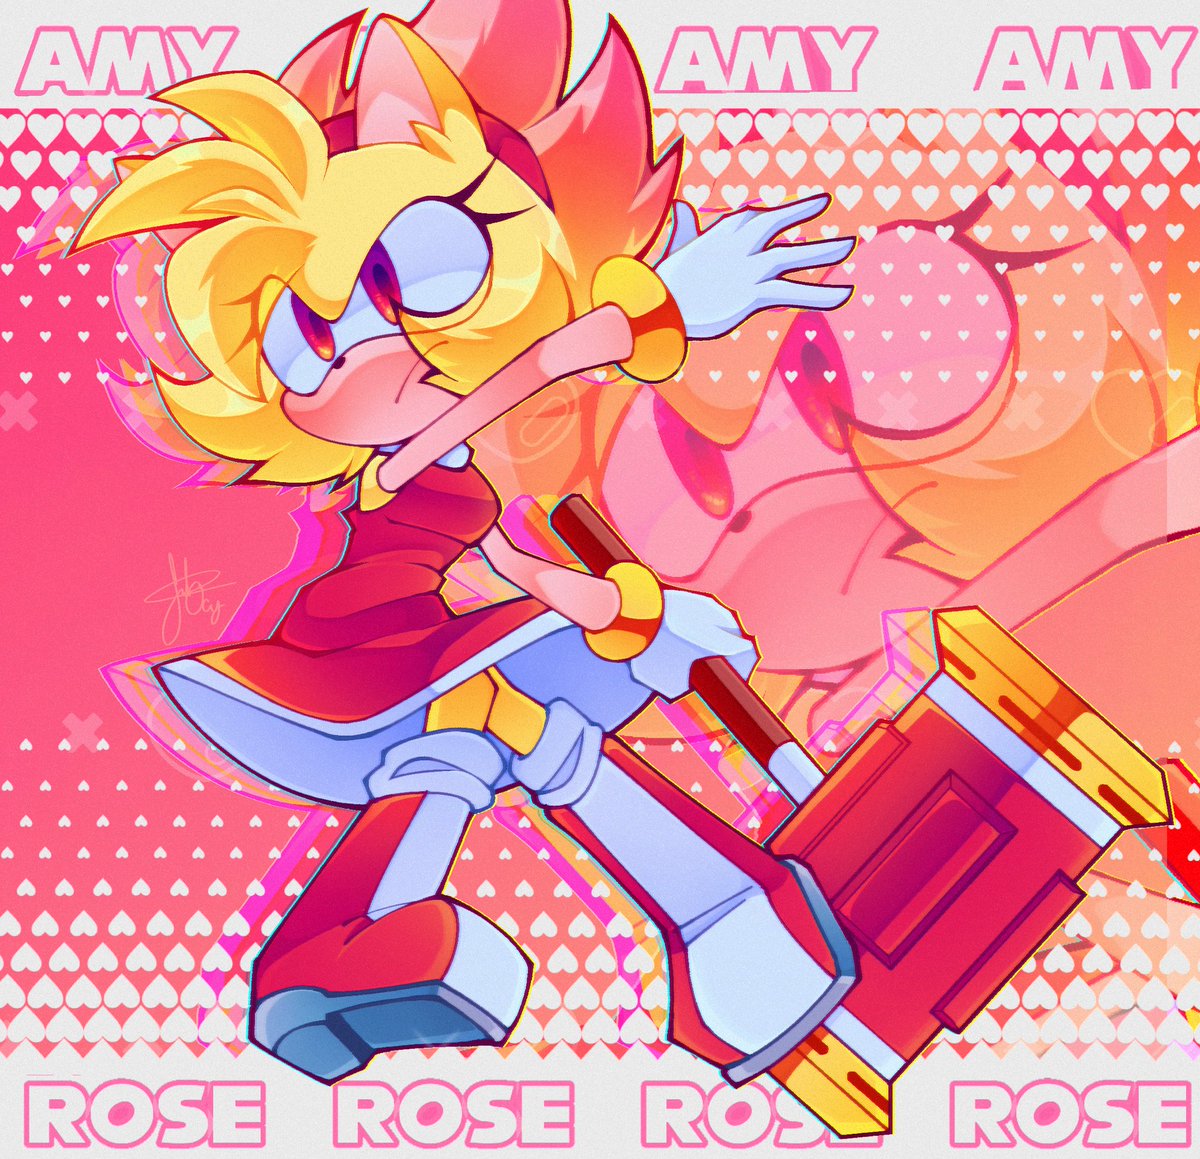 Amy Rose + Super!.
(Redraw).

Me encariñé.
#Sonic #SonicTheHedeghog #sonicfanart #SonicFrontiers #AmyRose #Amyrosefanart